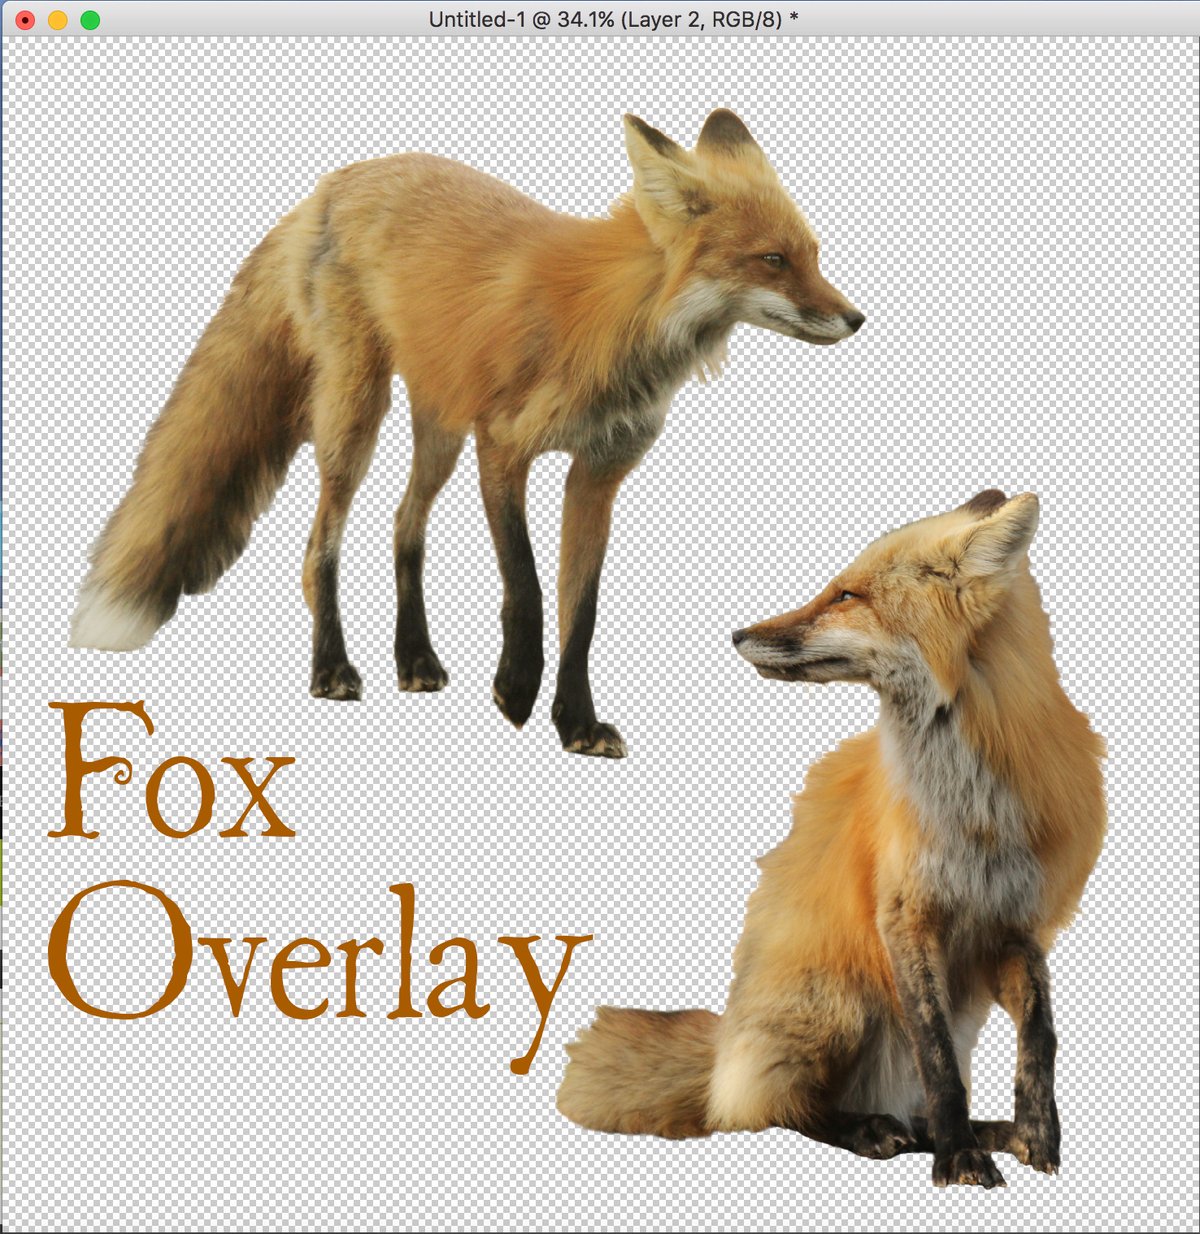 Image of Two Fox Overlay